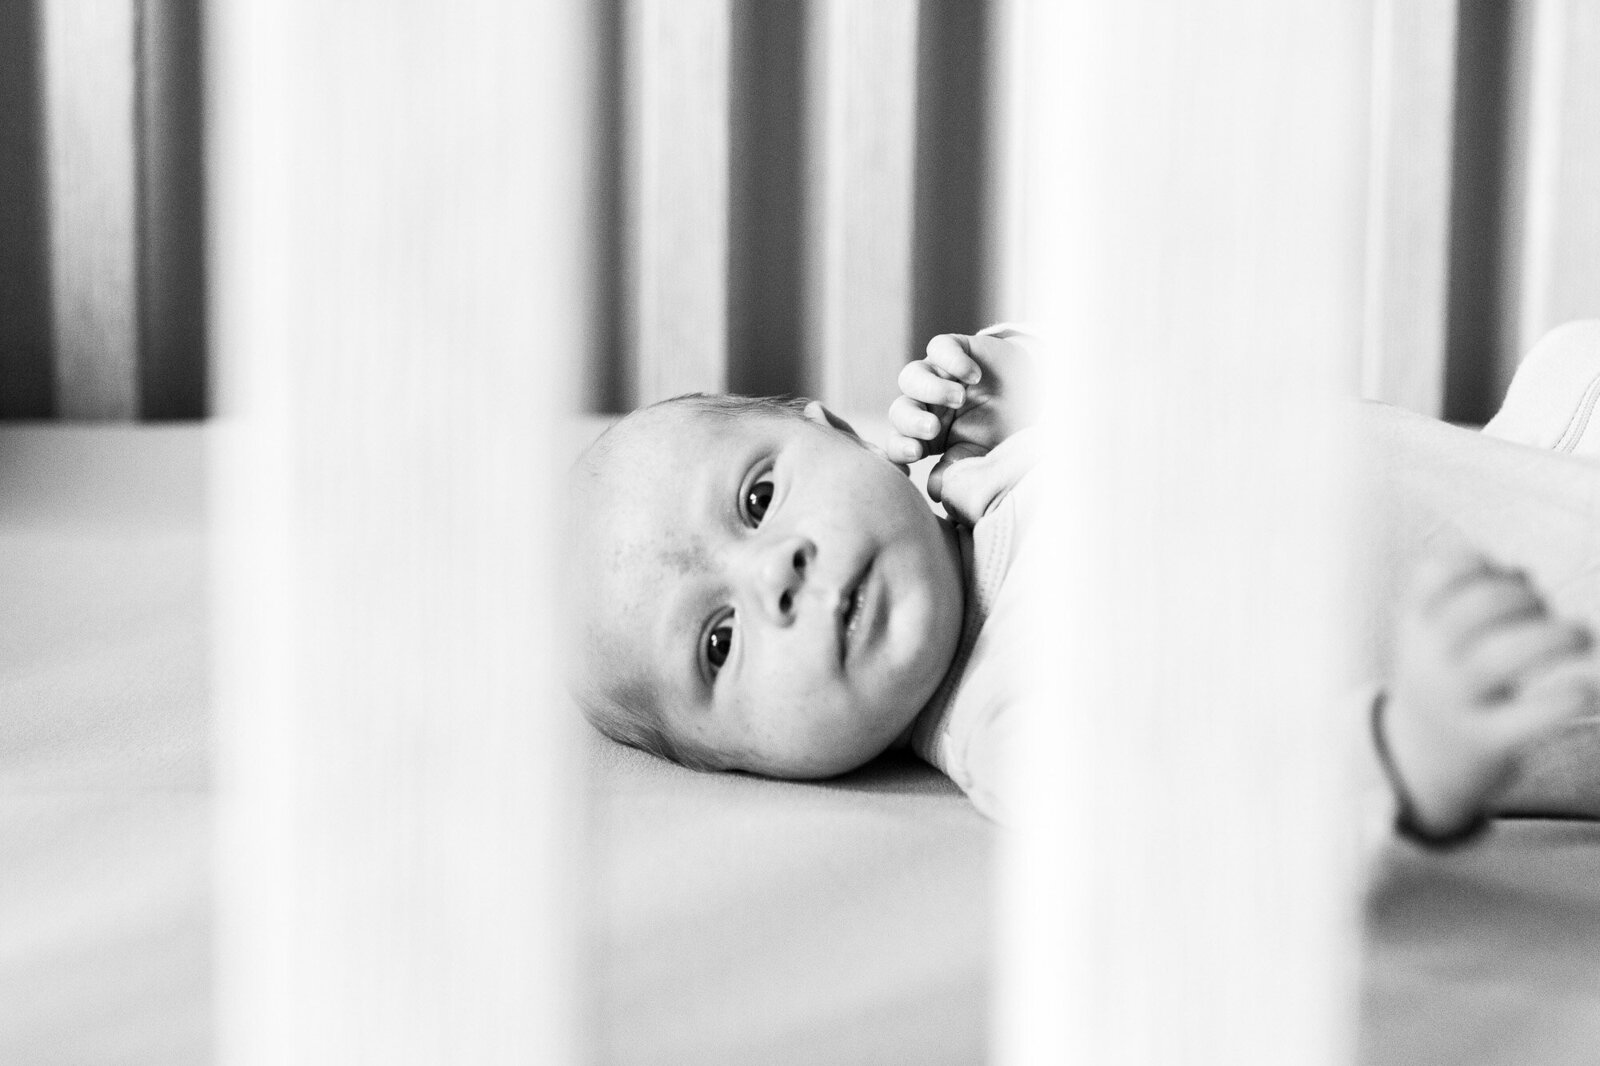 Monochrome image of newborn baby between crib slats.